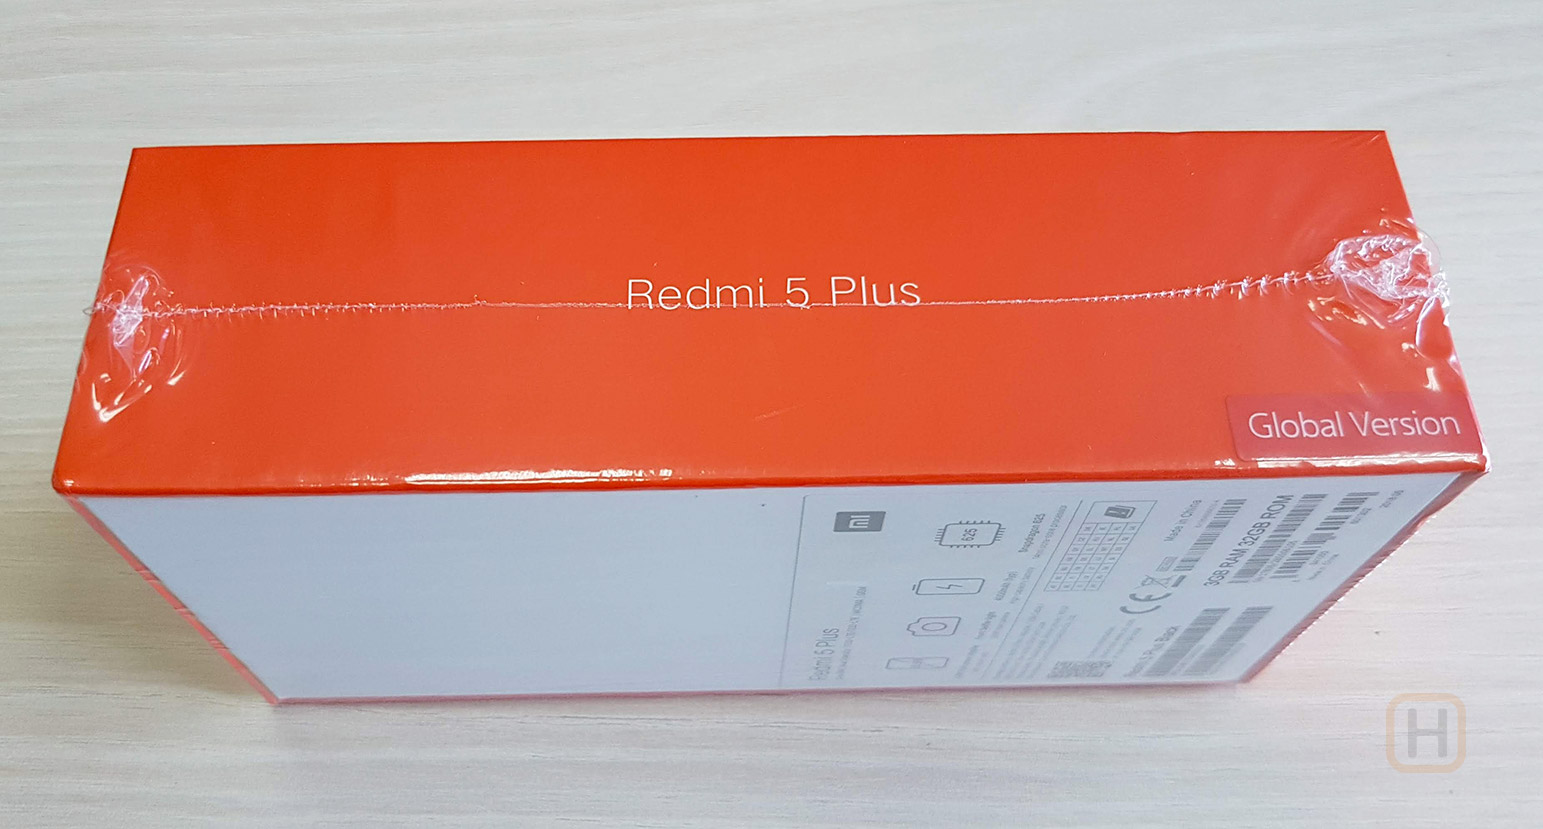 Redmi 5 Plus Global version